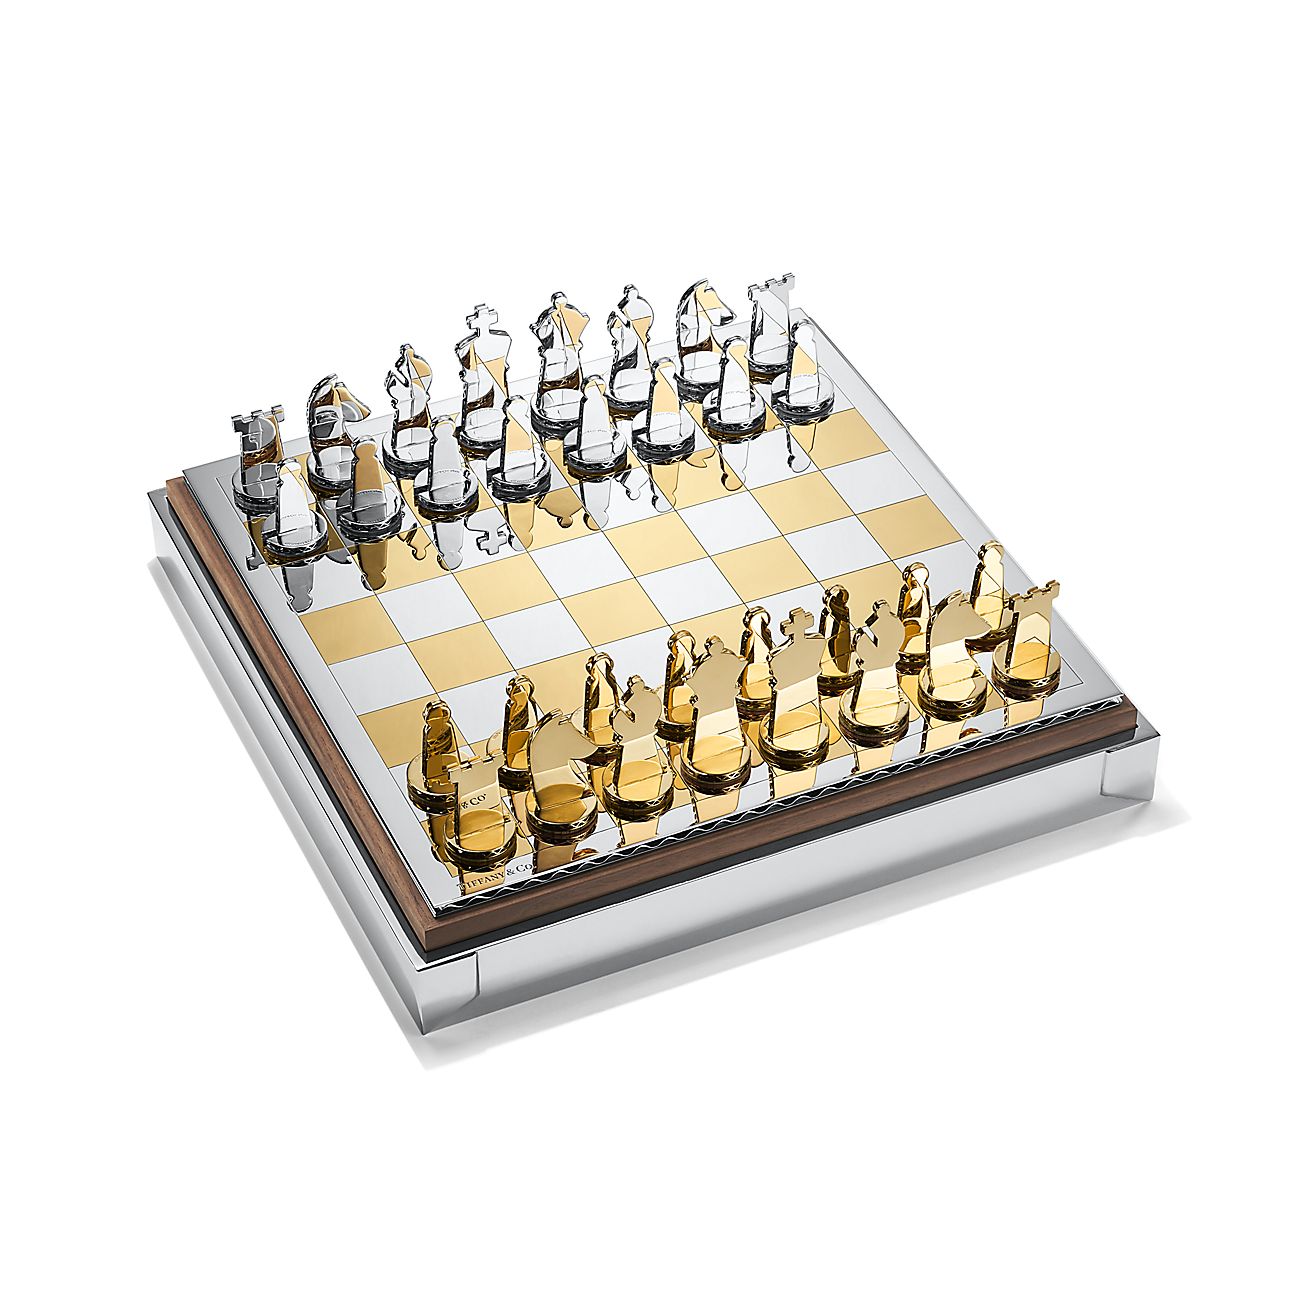 chess24.es - Ser premium por menos de 1 euro a la semana